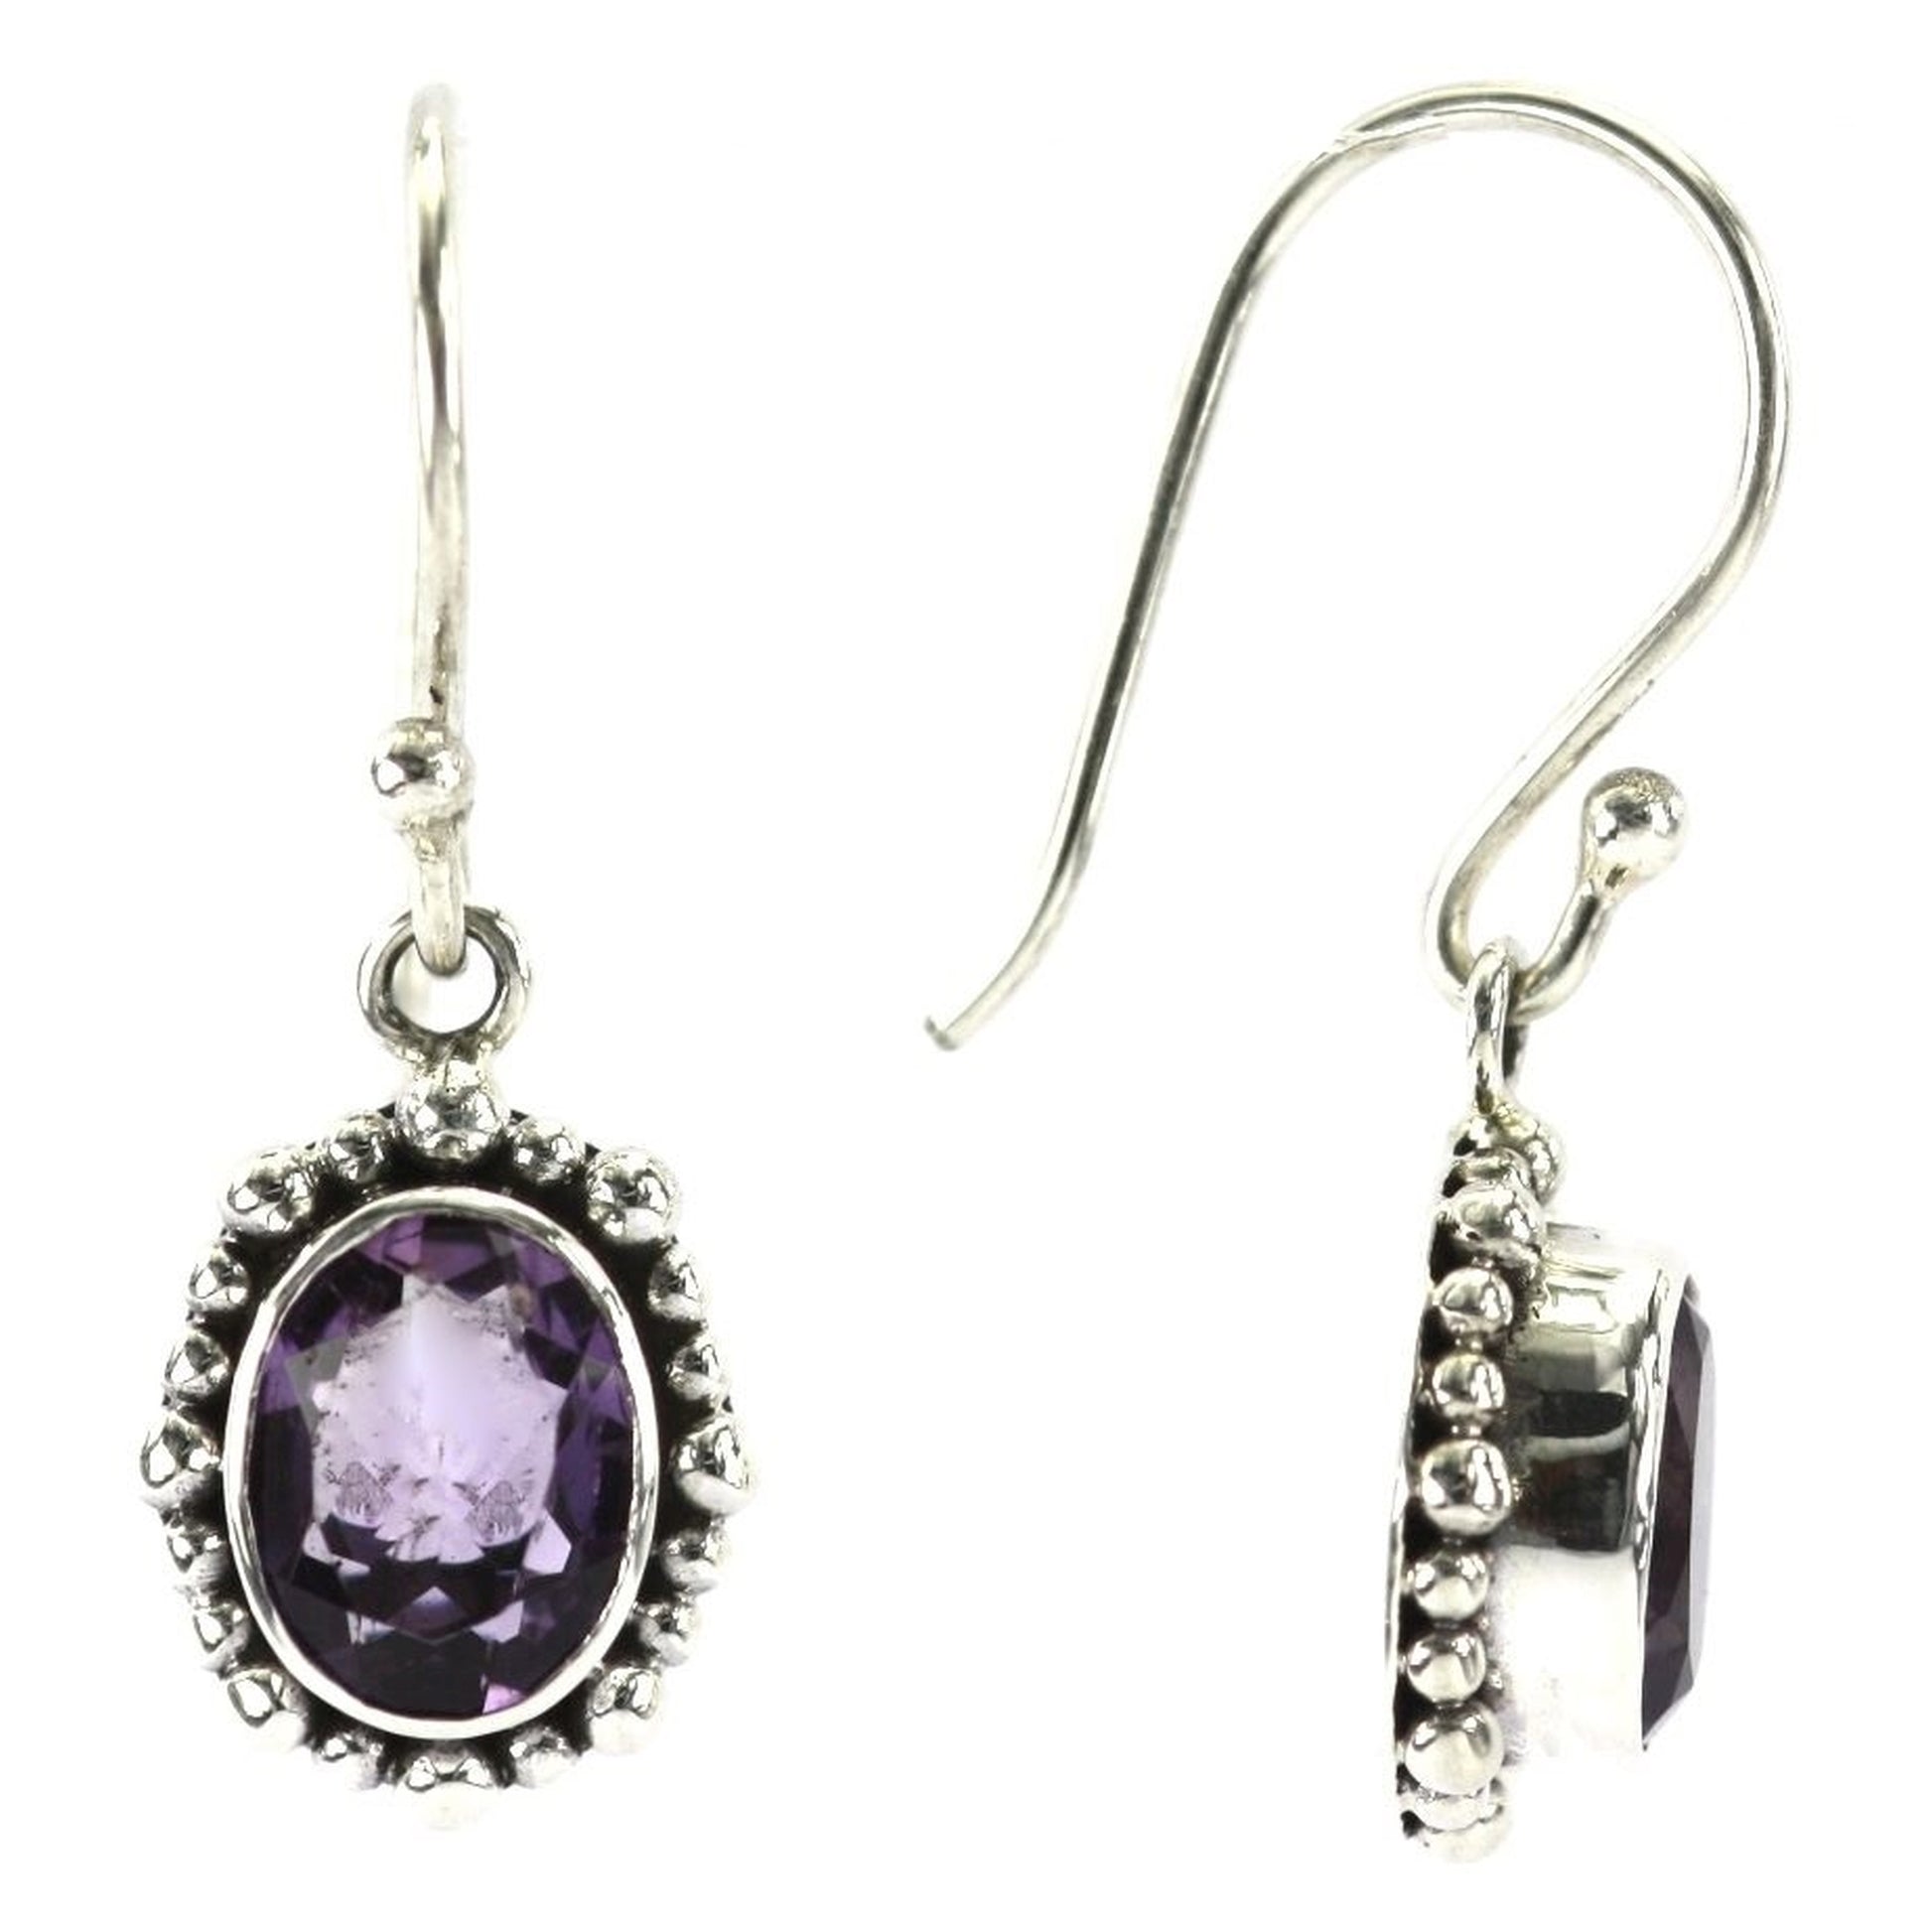 Silver earrings with oval purple amethyst gemstones.